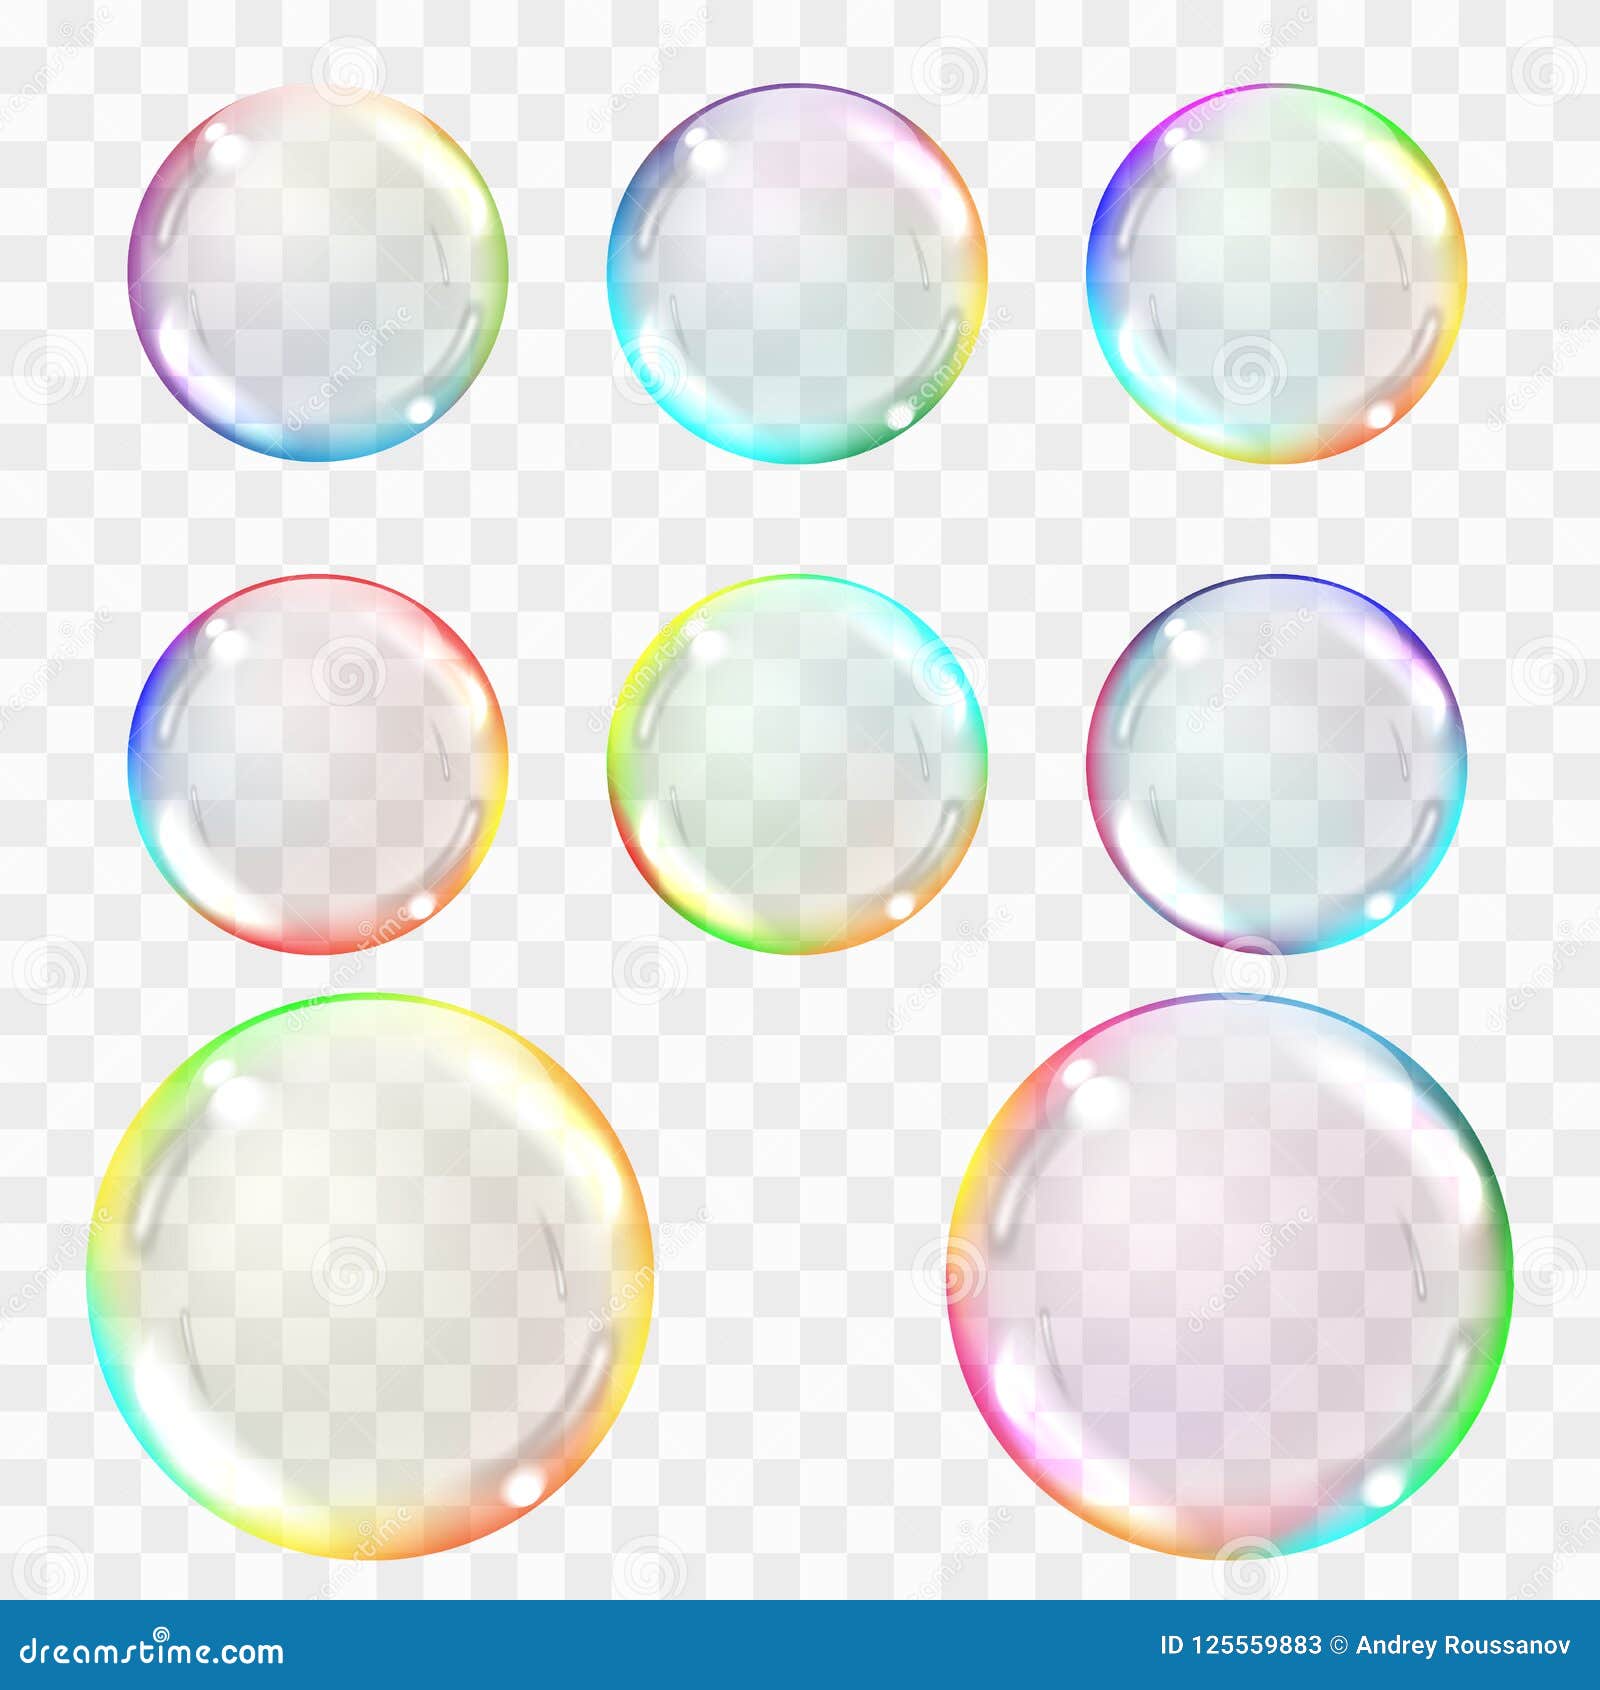 soap bubble. set of multicolored transparent bubbles with glares